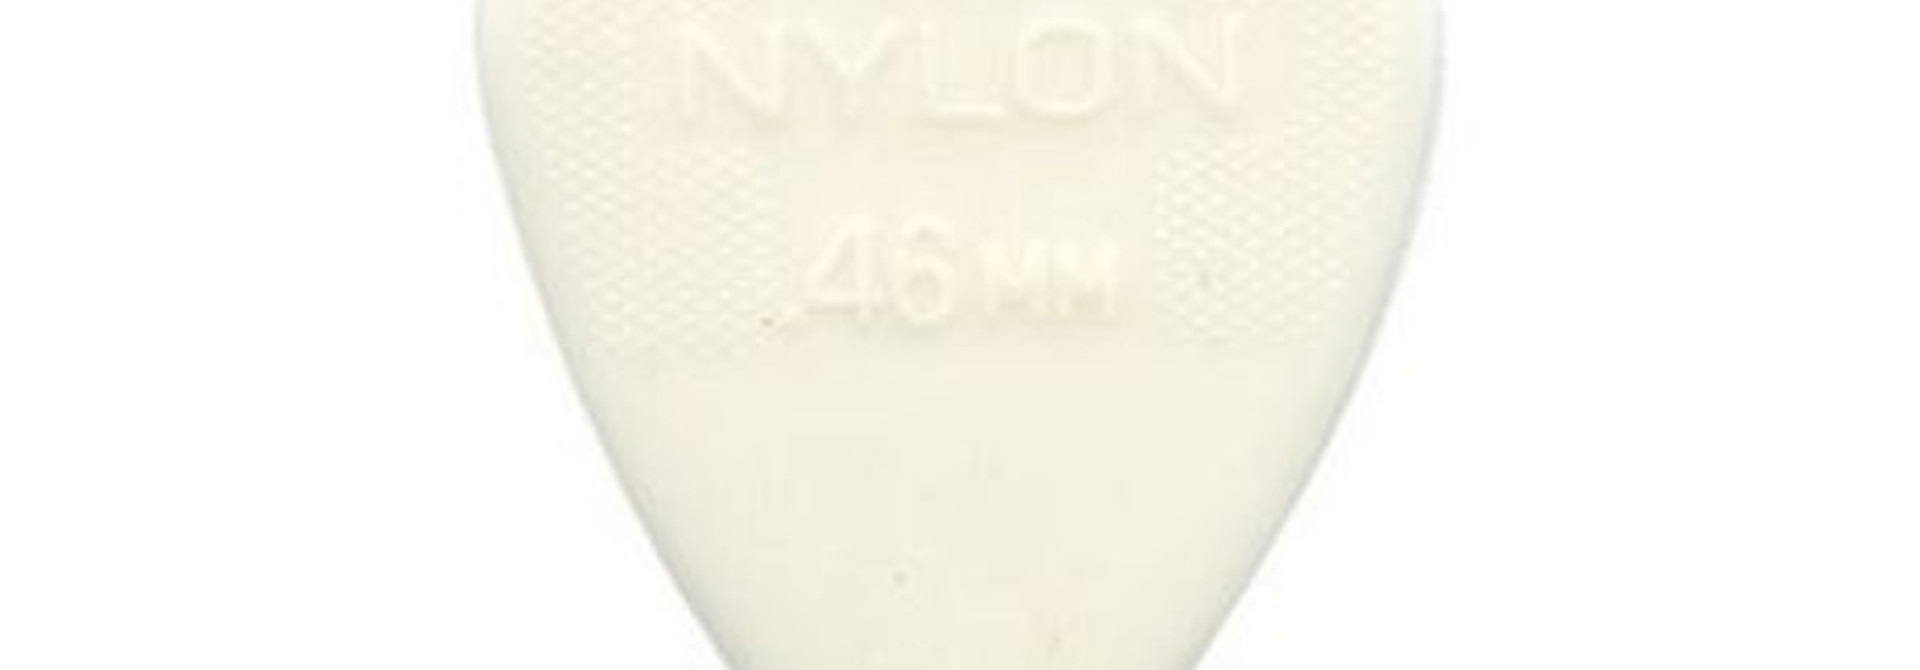 Dunlop Nylon Standard Picks